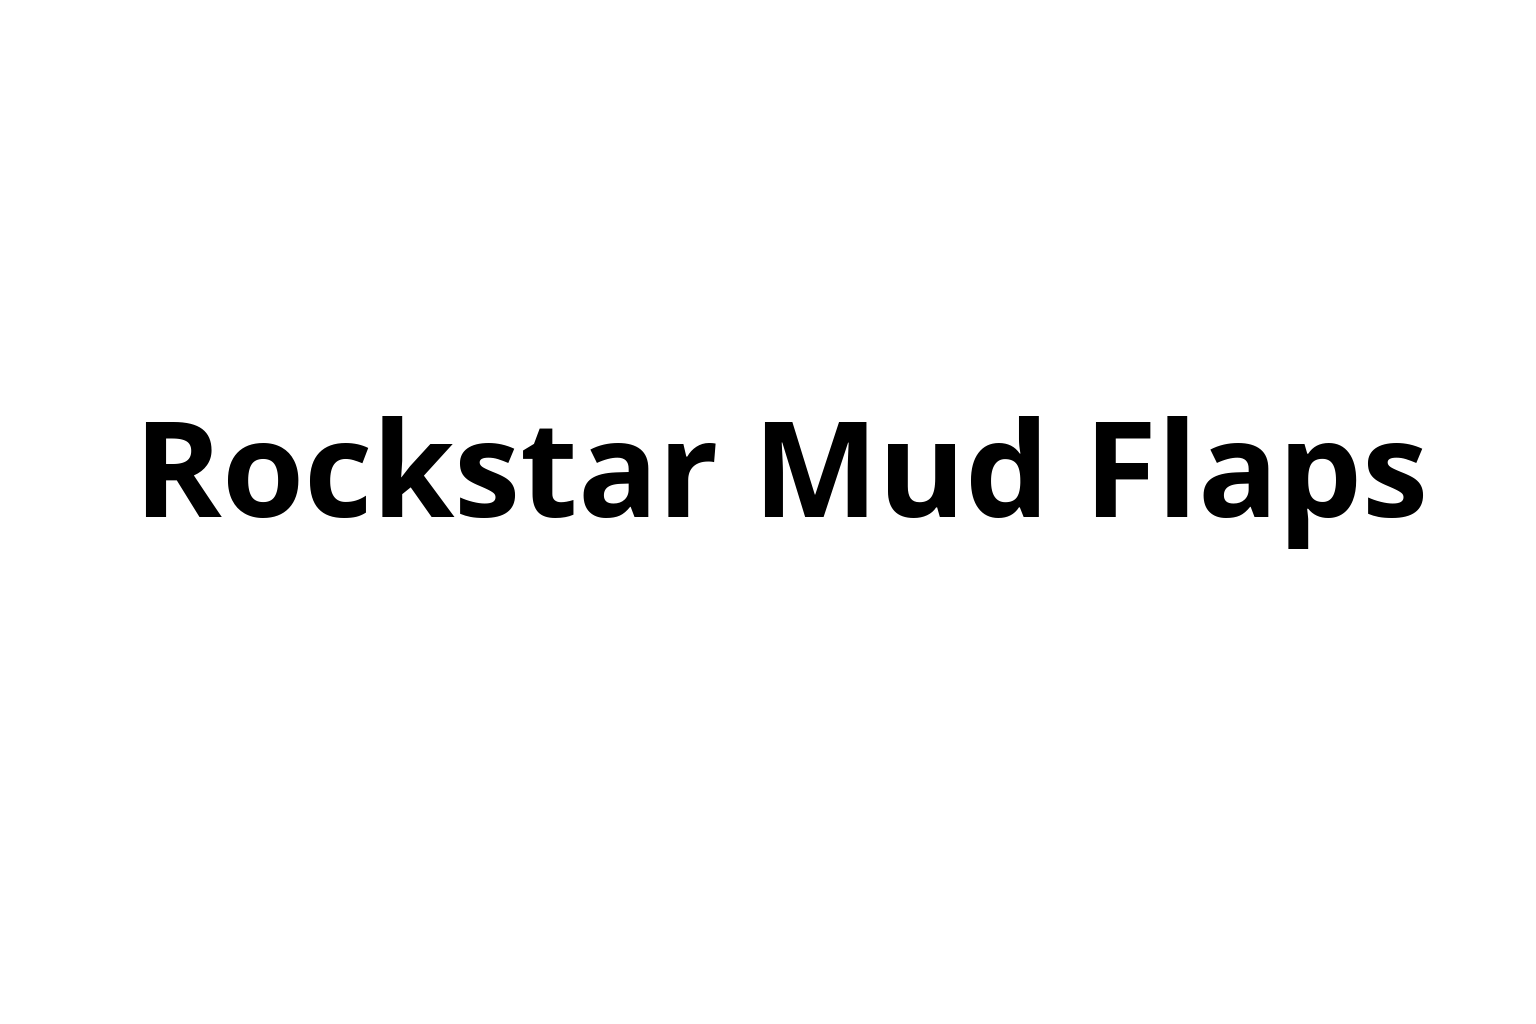 Rockstar Mud Flaps